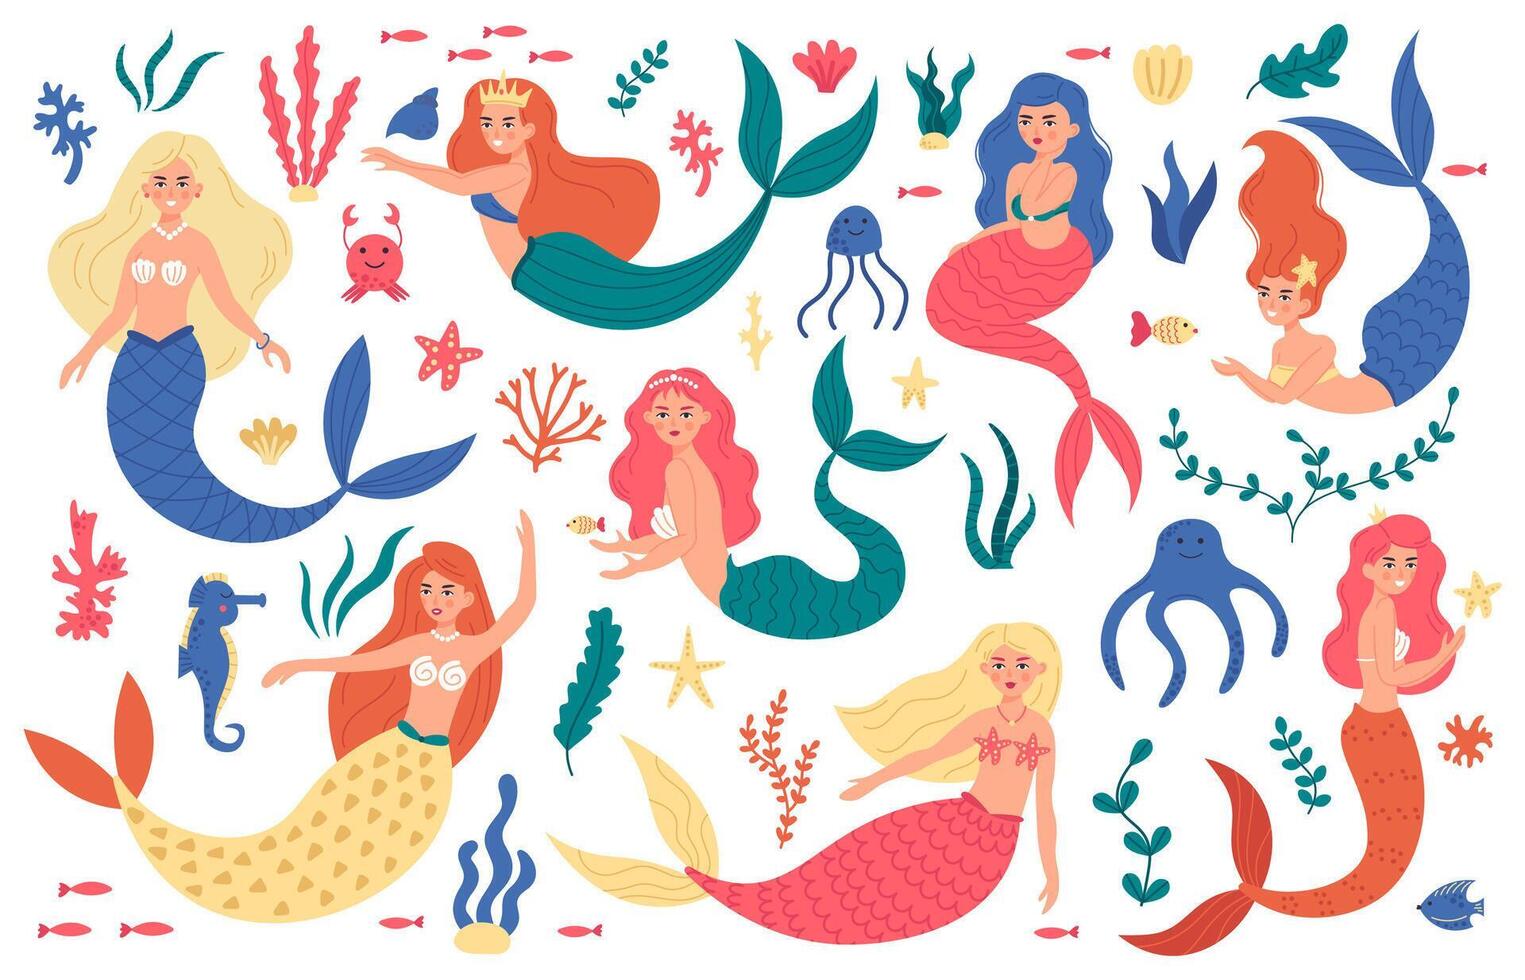 Cute mermaids. Princess mermaid characters, hand drawn magic fairy underwater, marine life, mermaid girls and sea elements vector illustration set